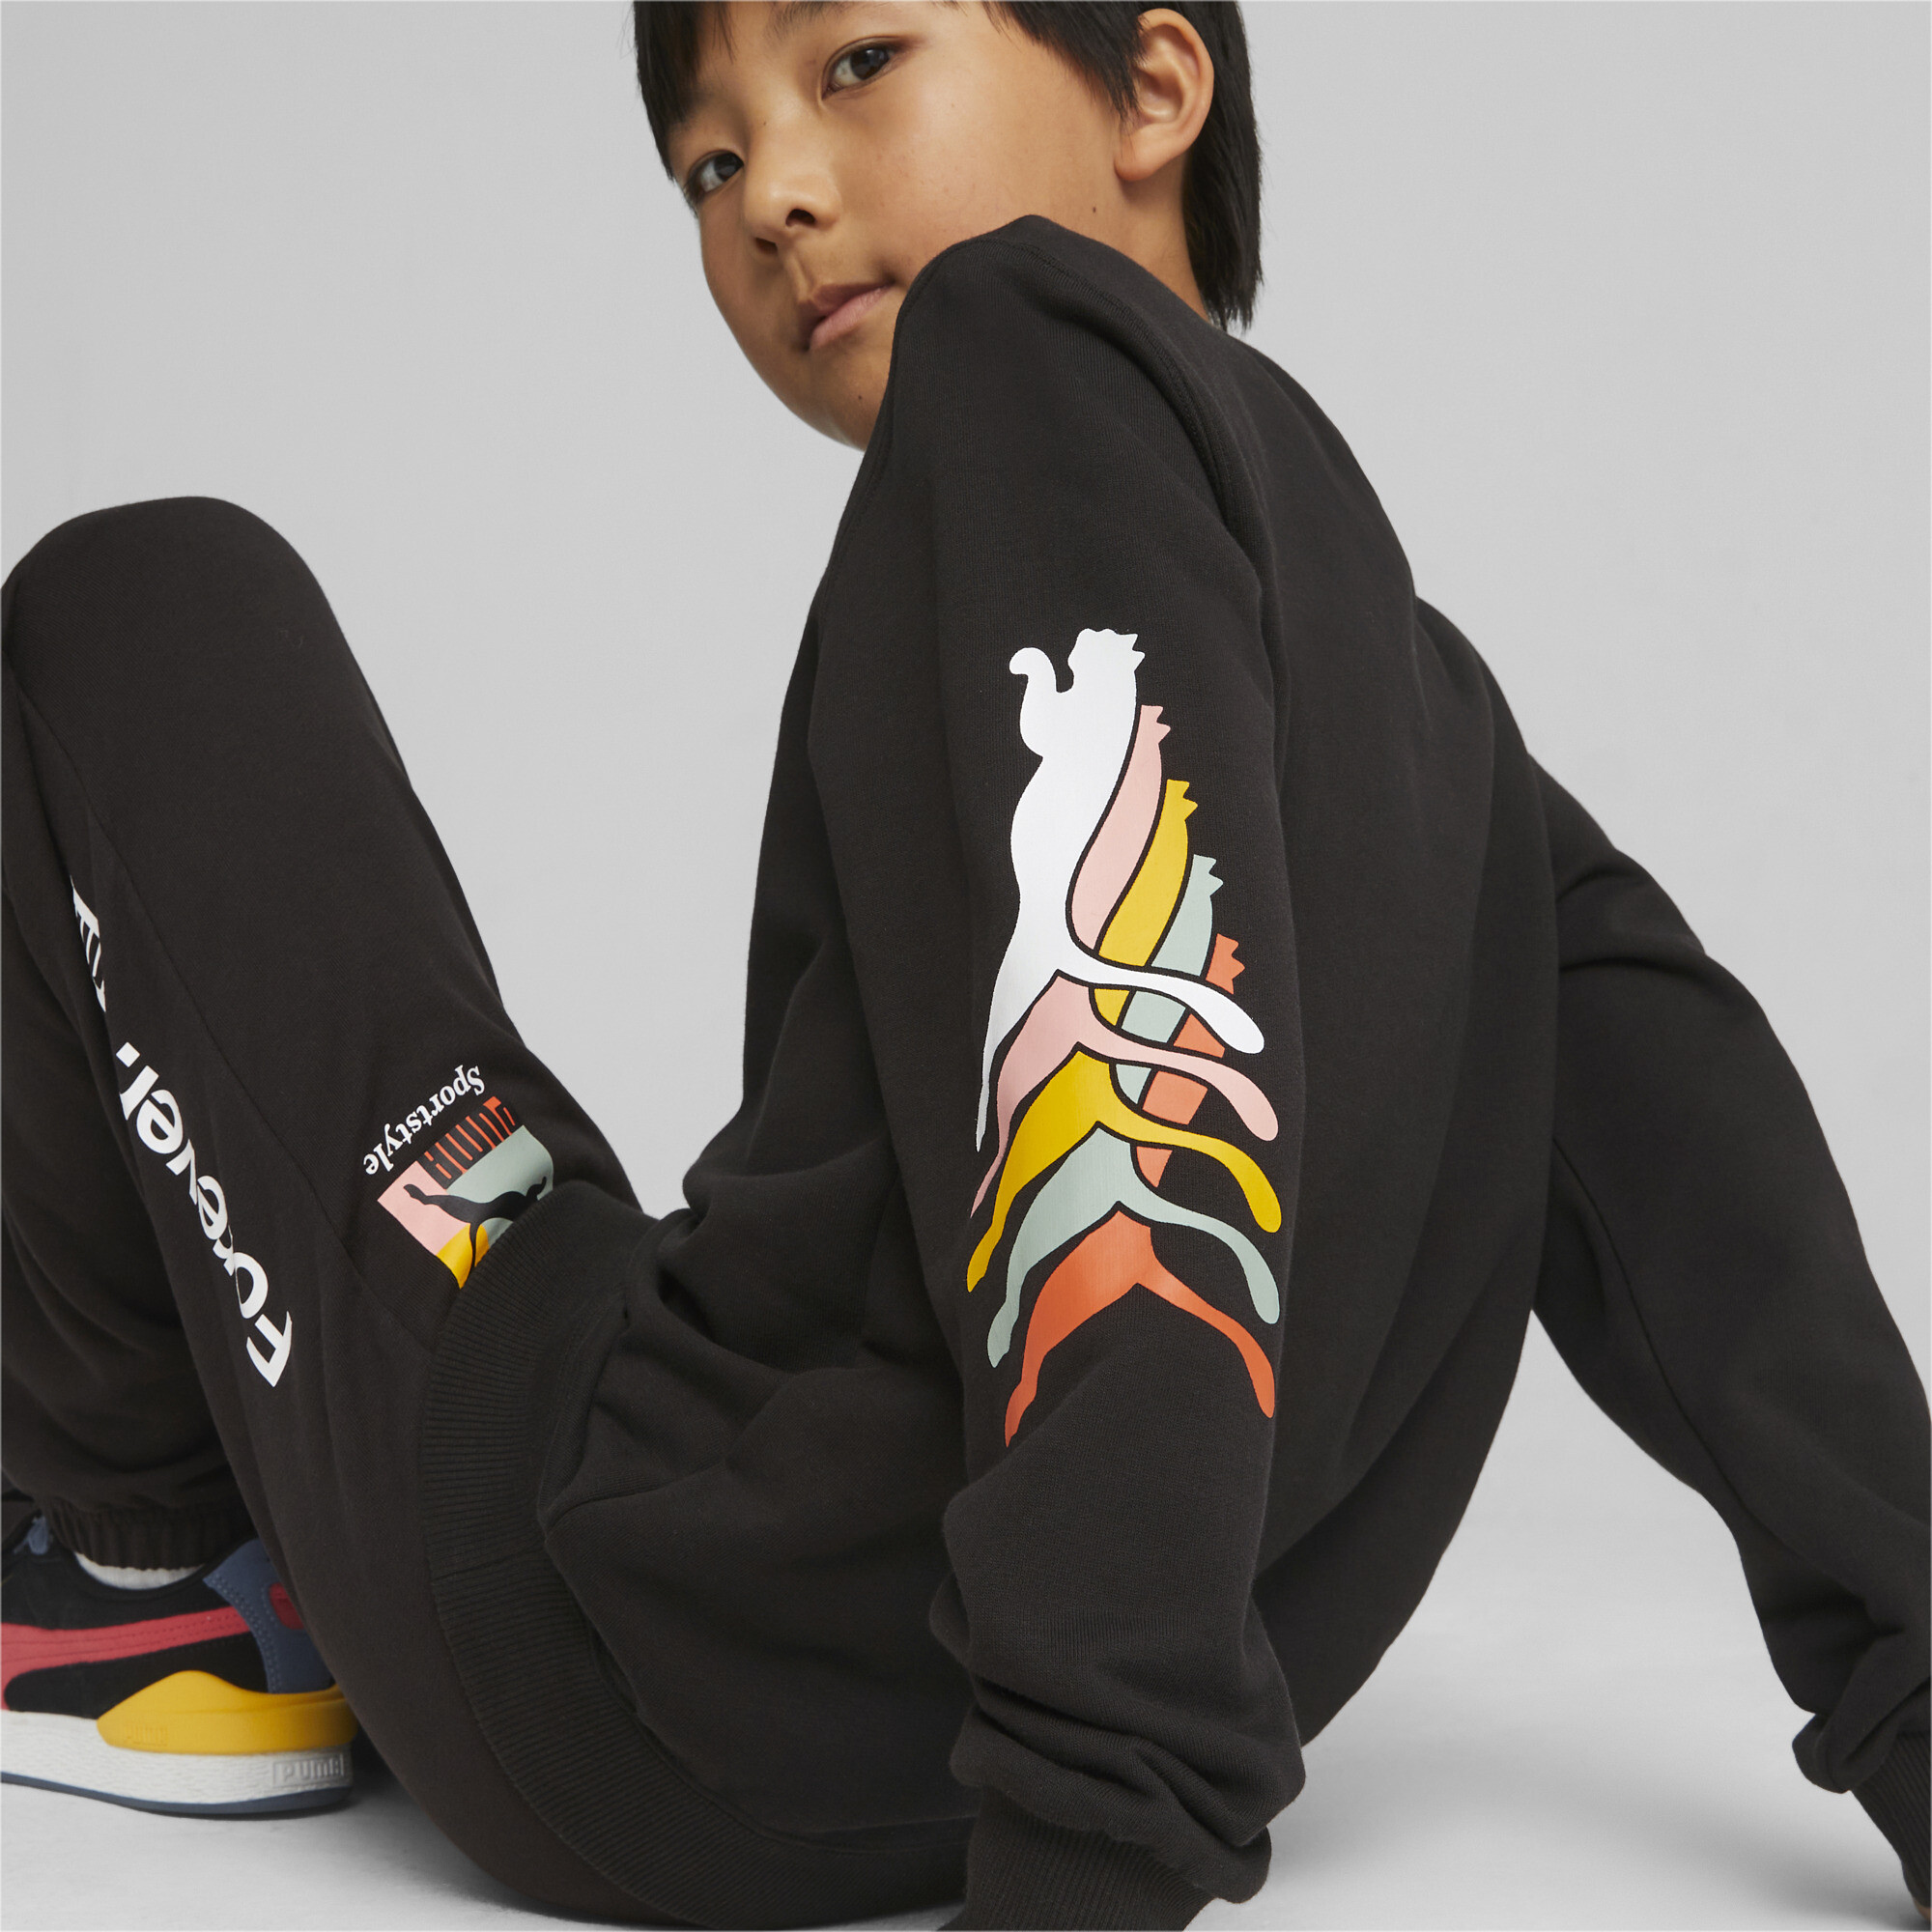 Men's Puma Classics Brand Love Youth Sweatshirt, Black, Size 7-8Y, Clothing